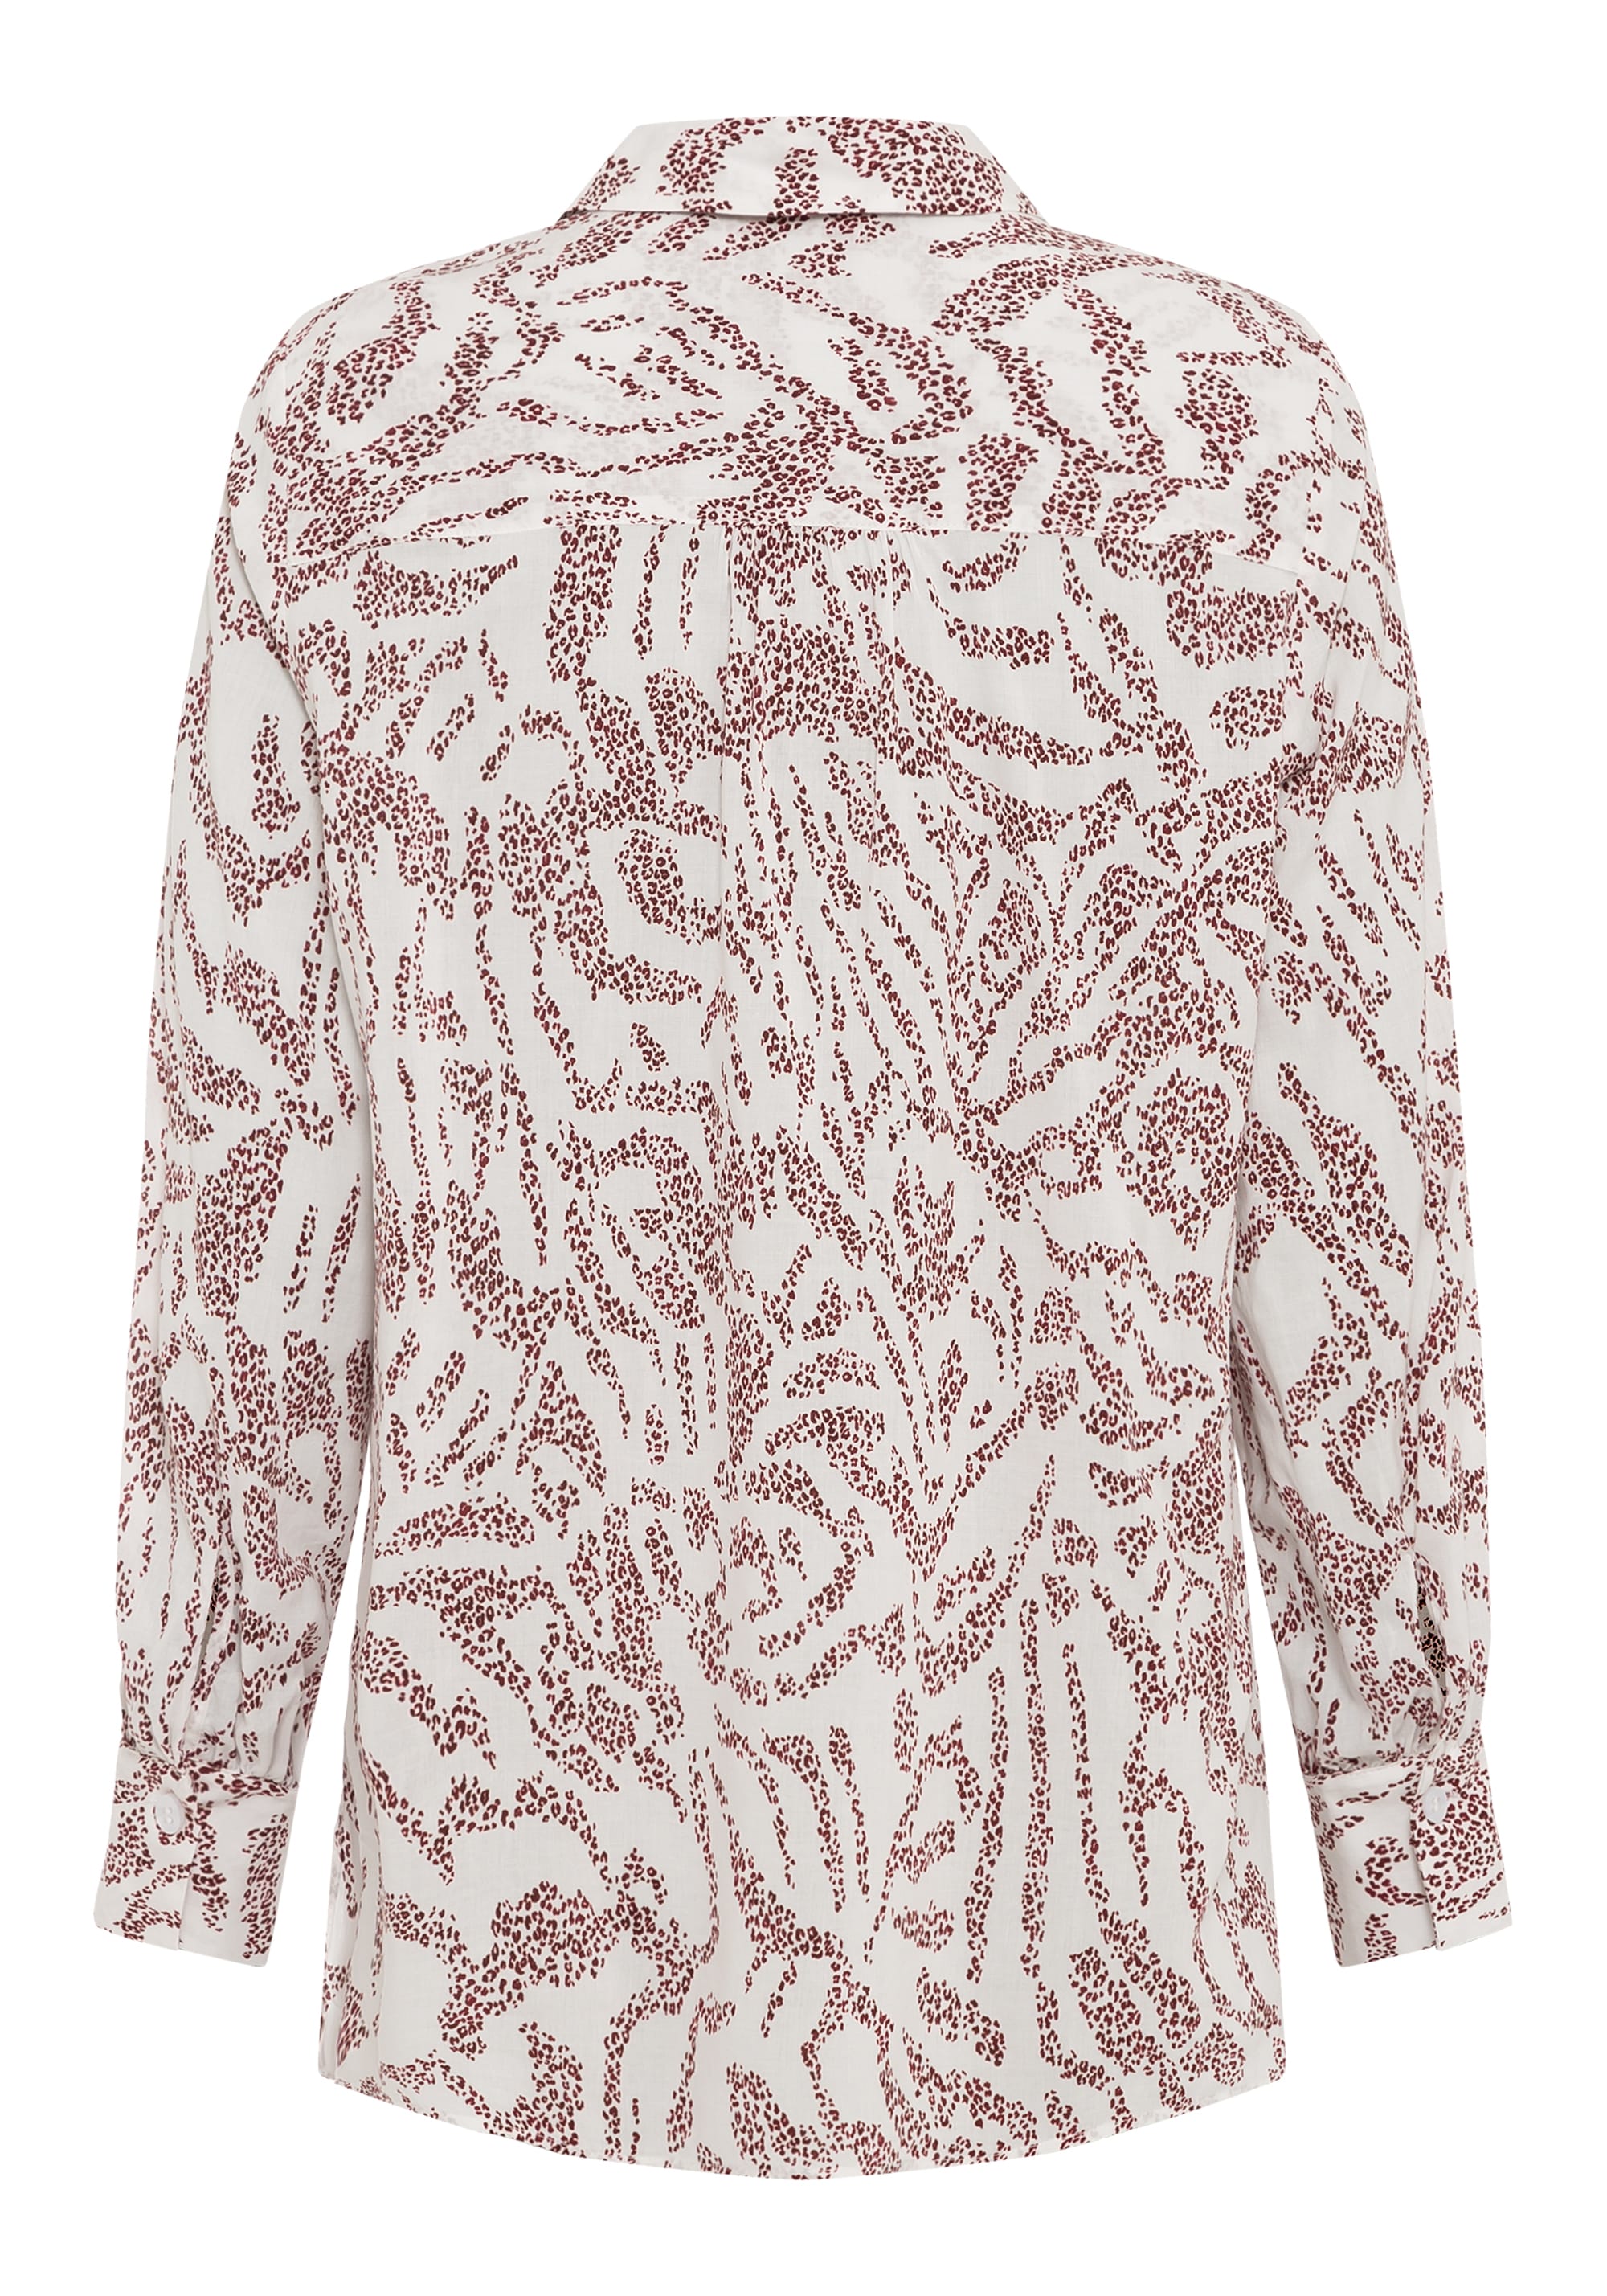 Cotton Blend Long Sleeve Animal Print Tunic Shirt - Olsen Fashion